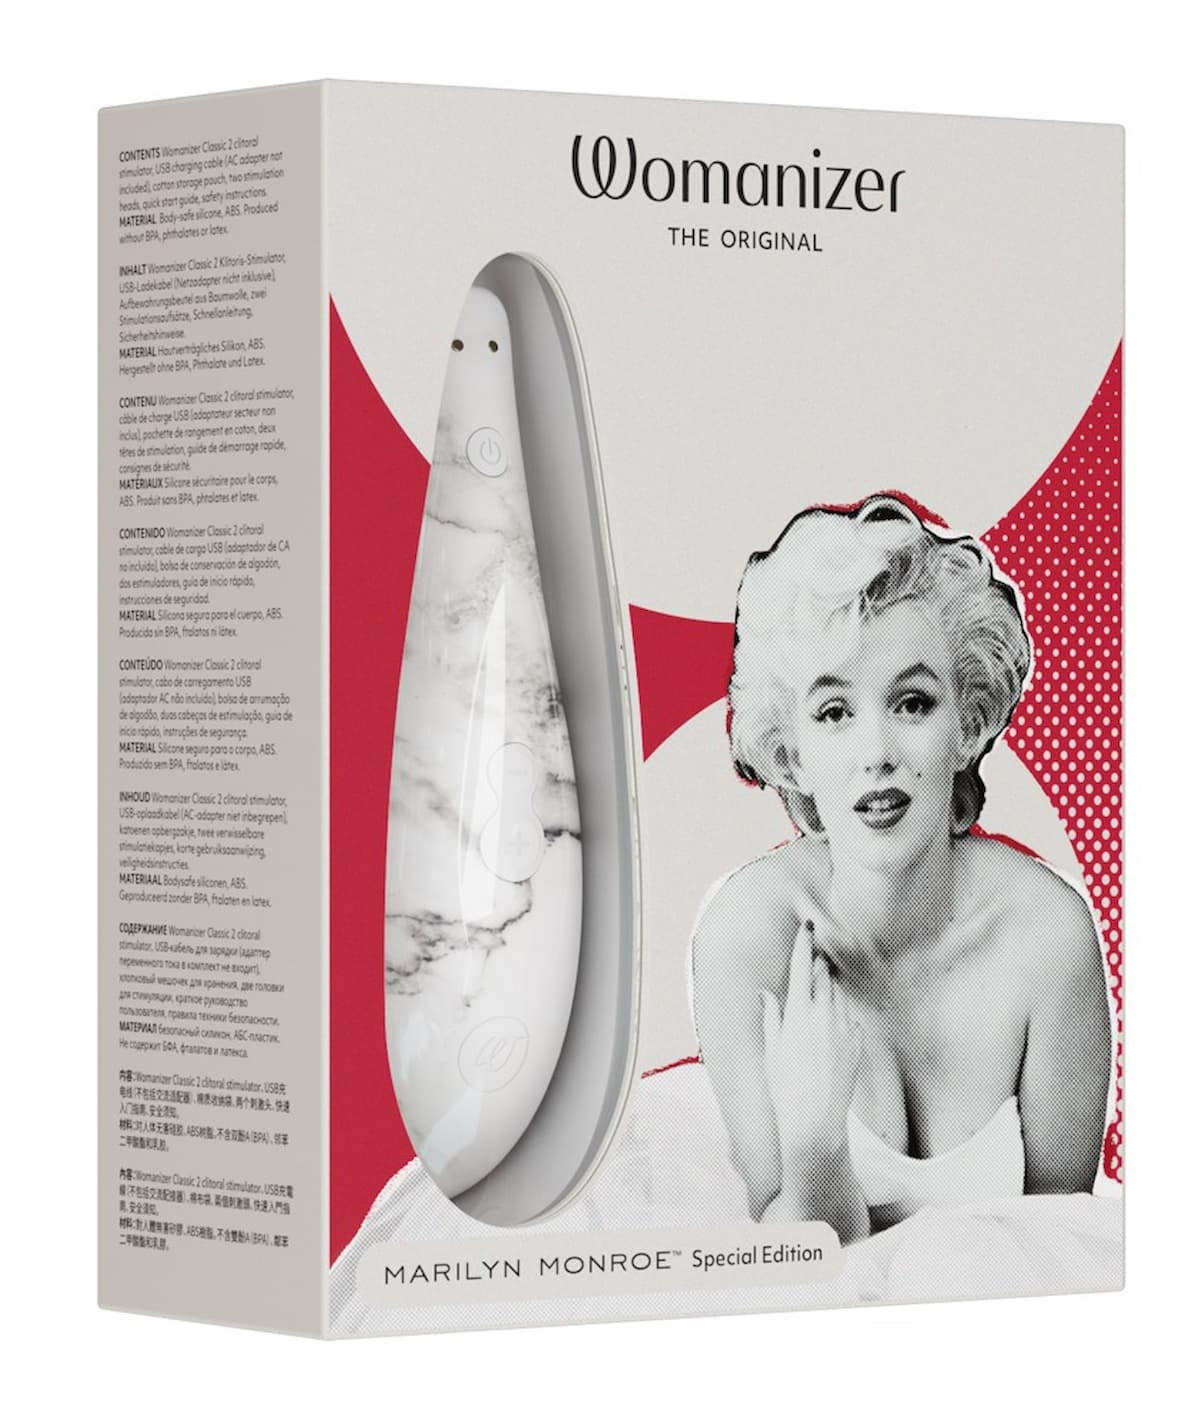 Marilyn White Monroe Vibrator WOMANIZER